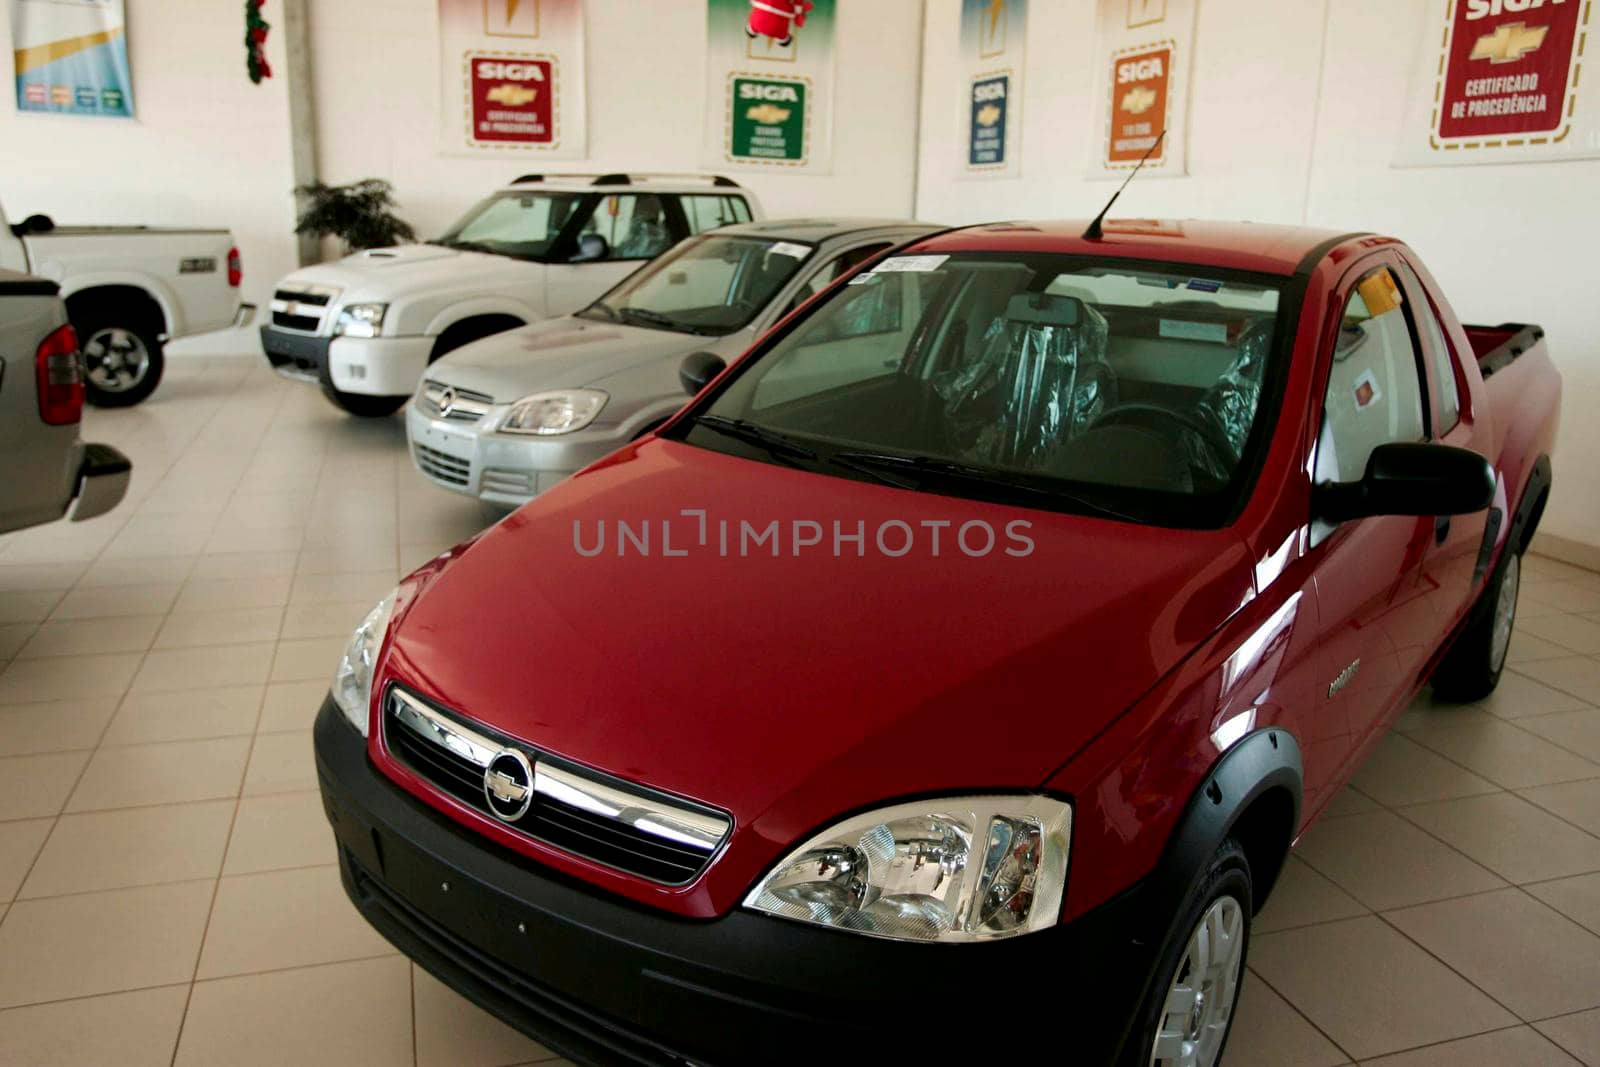 eunapolis, bahia / brazil - december 7, 2009: vehicles are seen in a concierge shop in the city of Eunapolis.